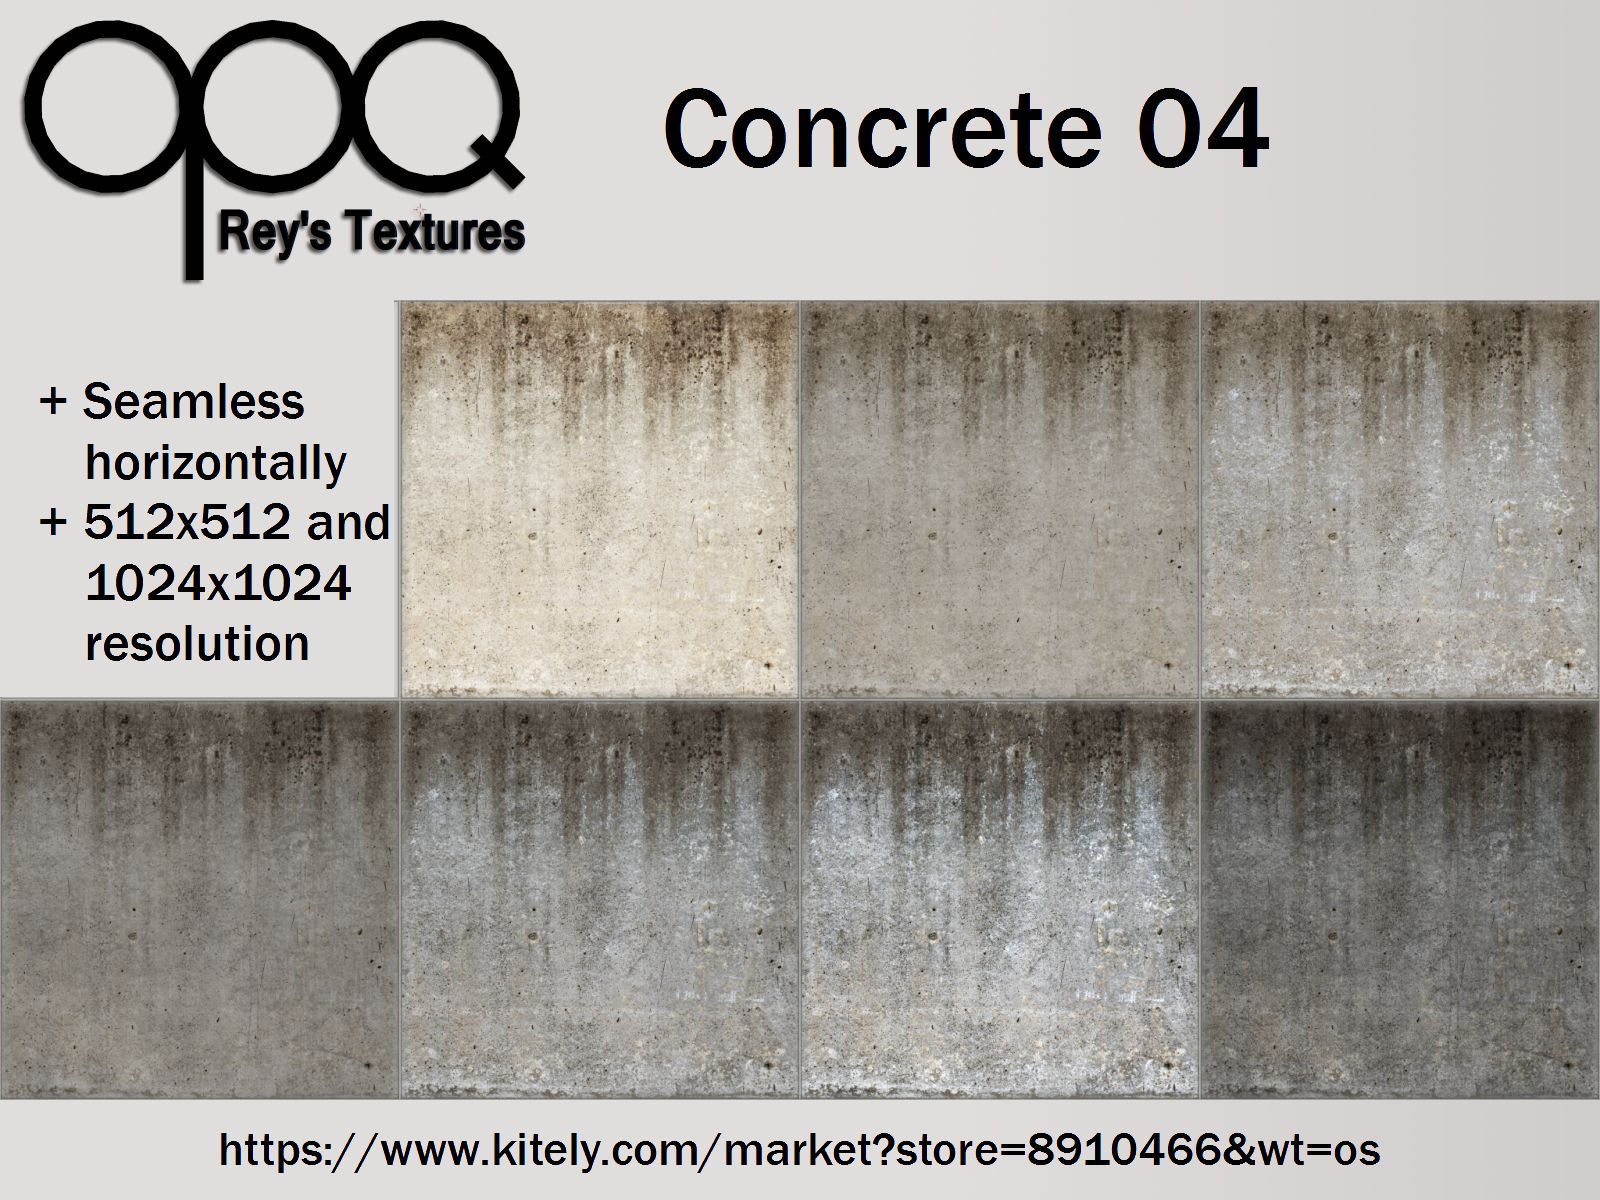 Rey's Concrete 04 Poster Kitely.jpg